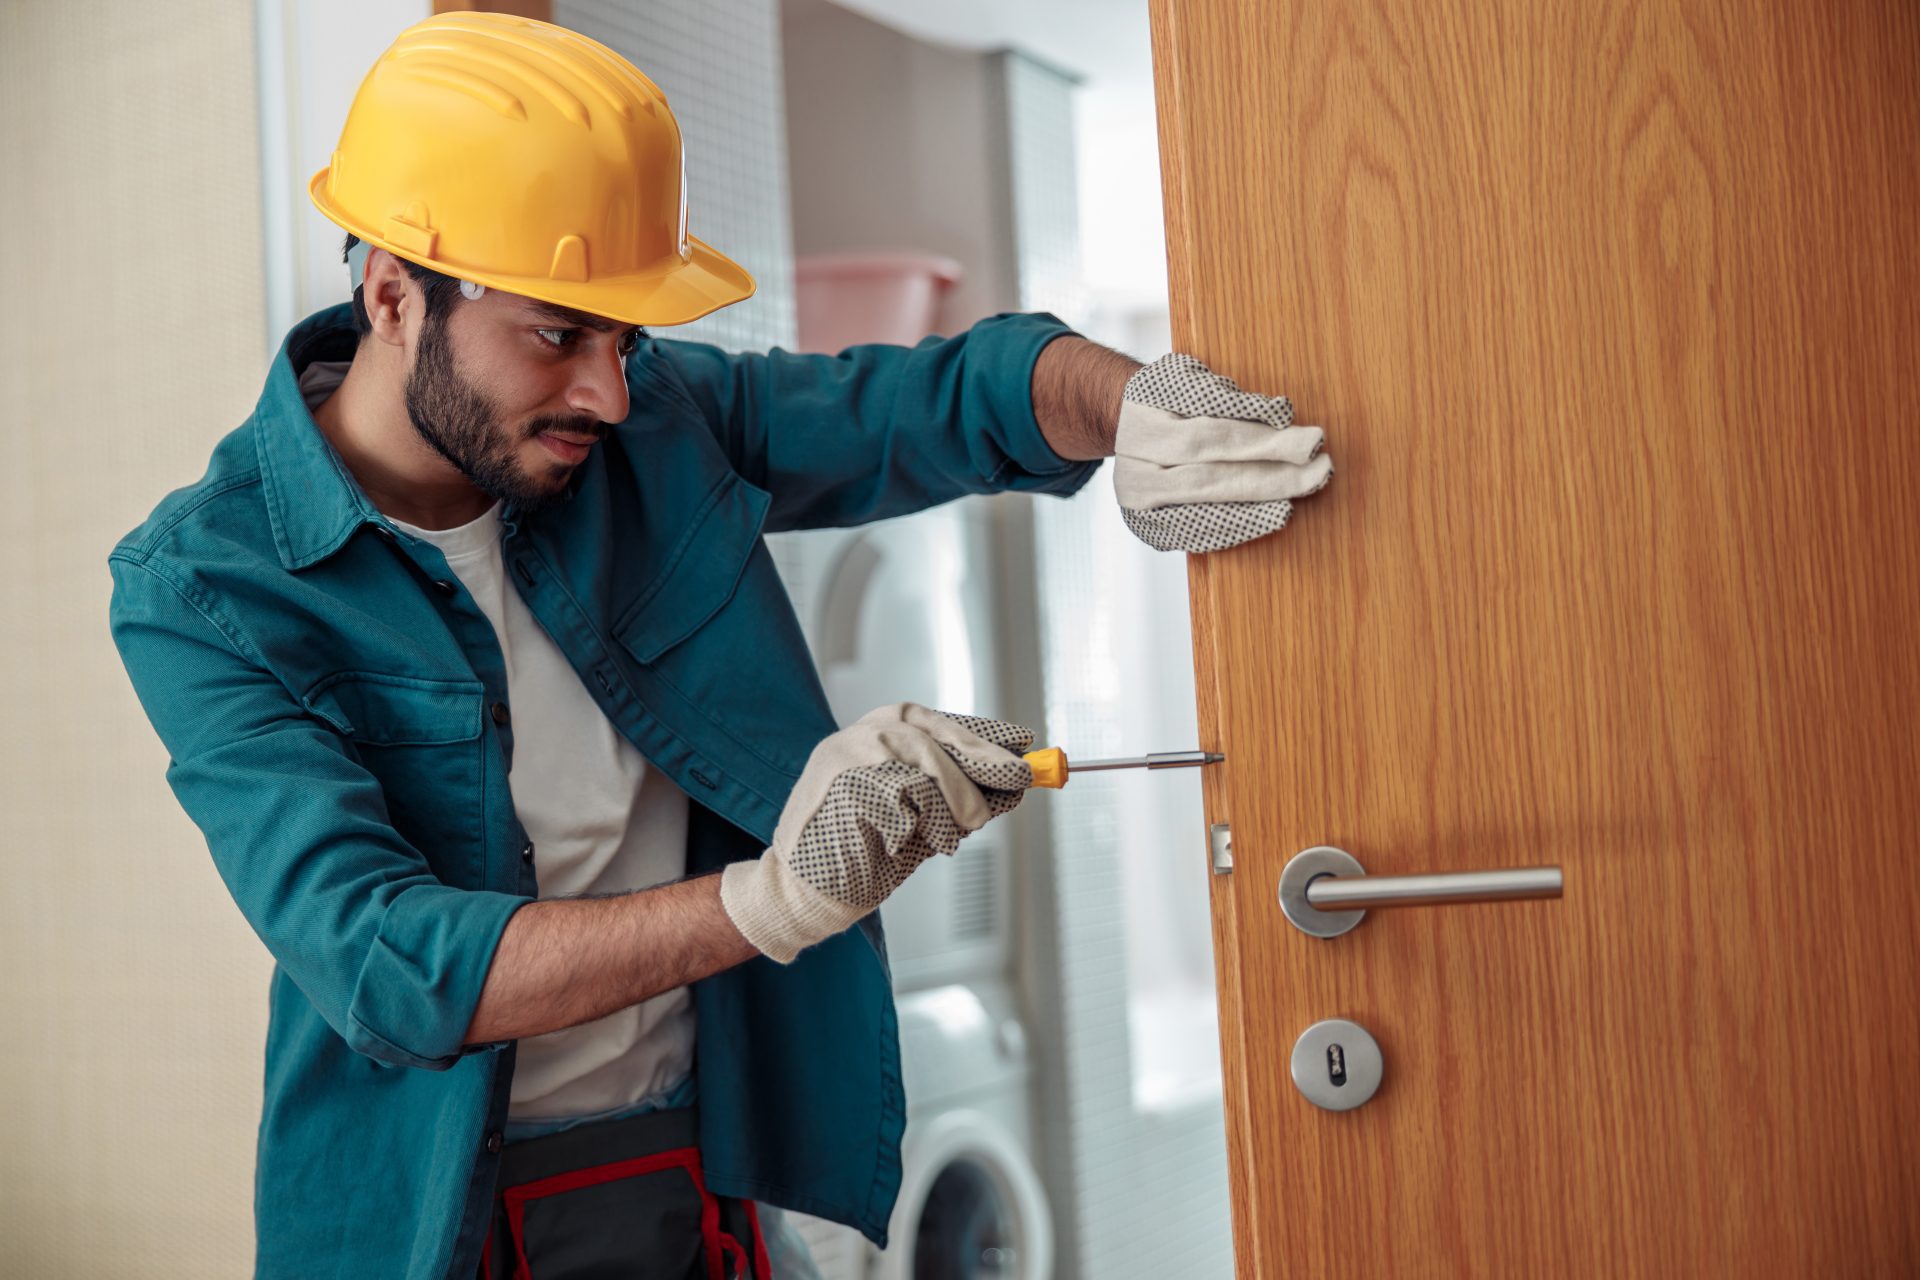 locksmith workman in uniform installing door knob 2023 01 05 00 20 11 utc - The LockSmith Co.